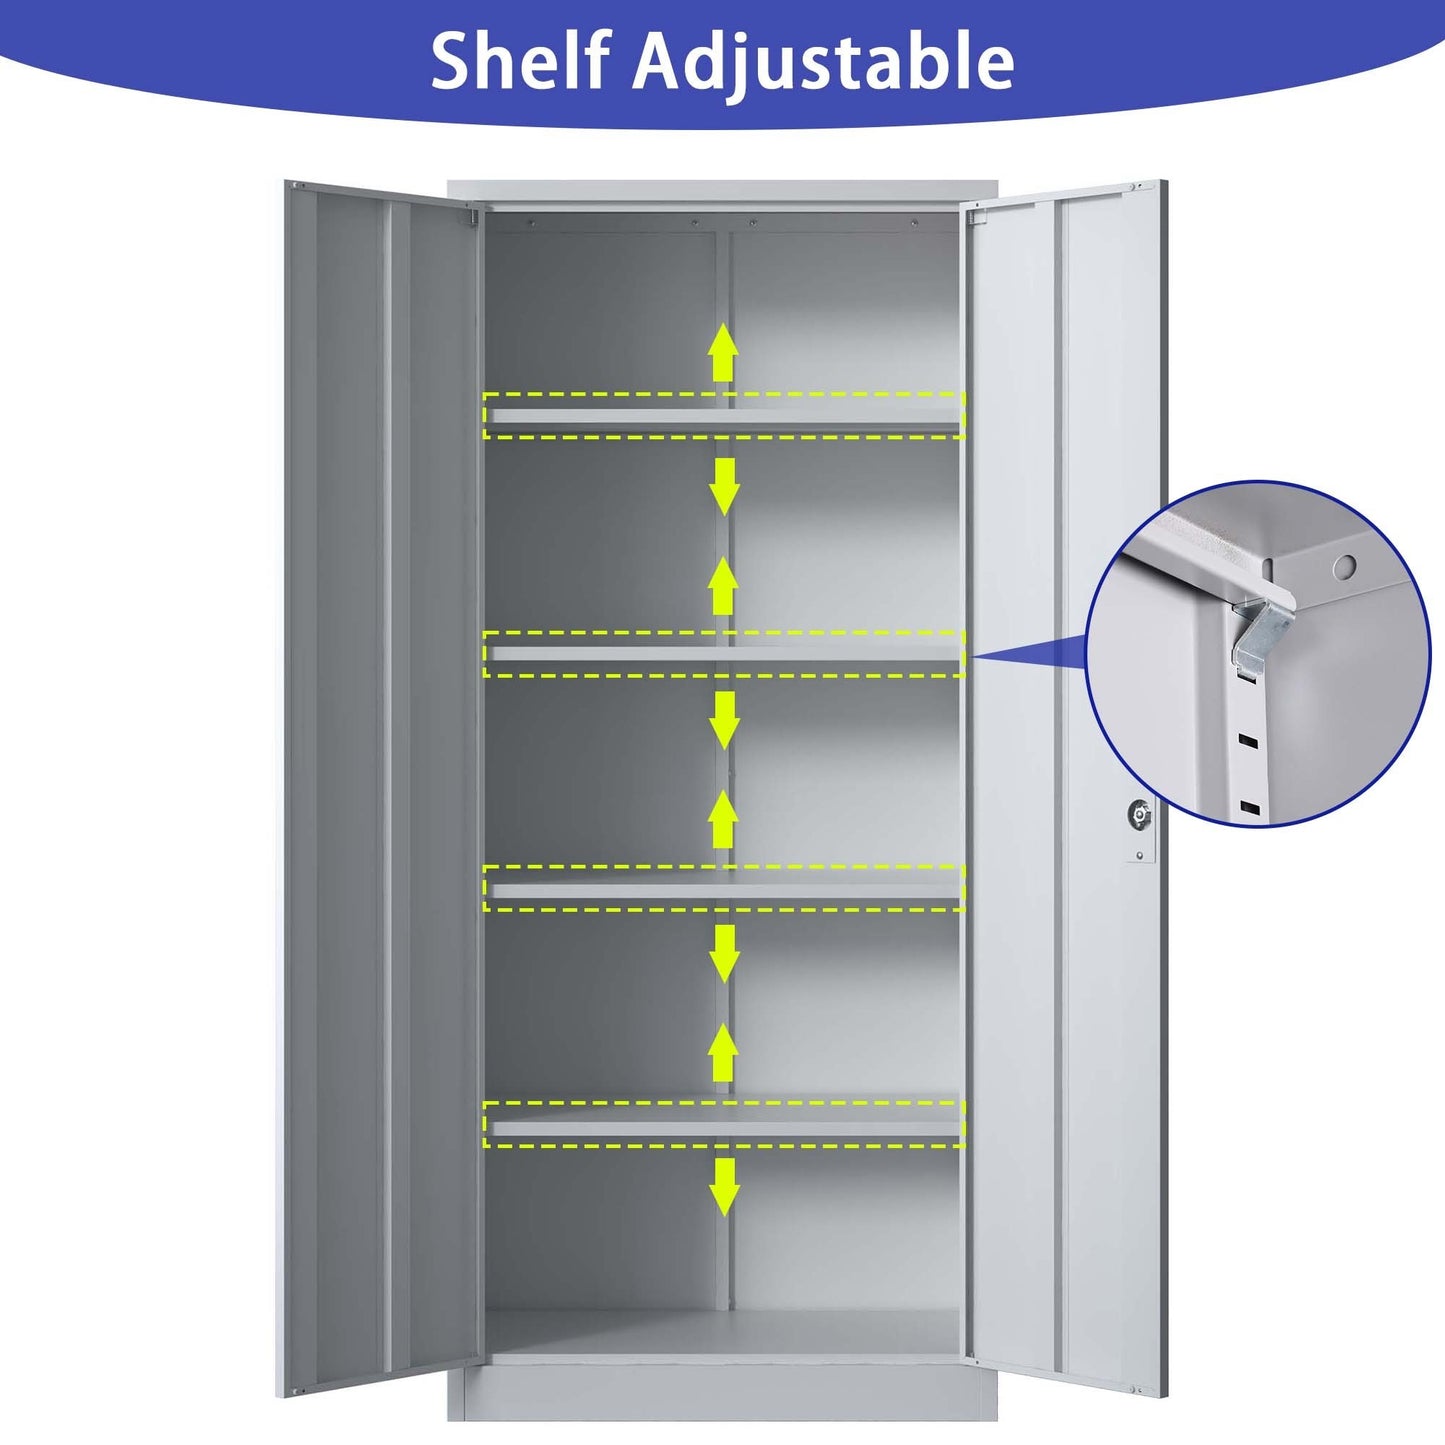 71H Black Steel Garage Storage Cabinet with Locking Doors and Adjustable Shelves